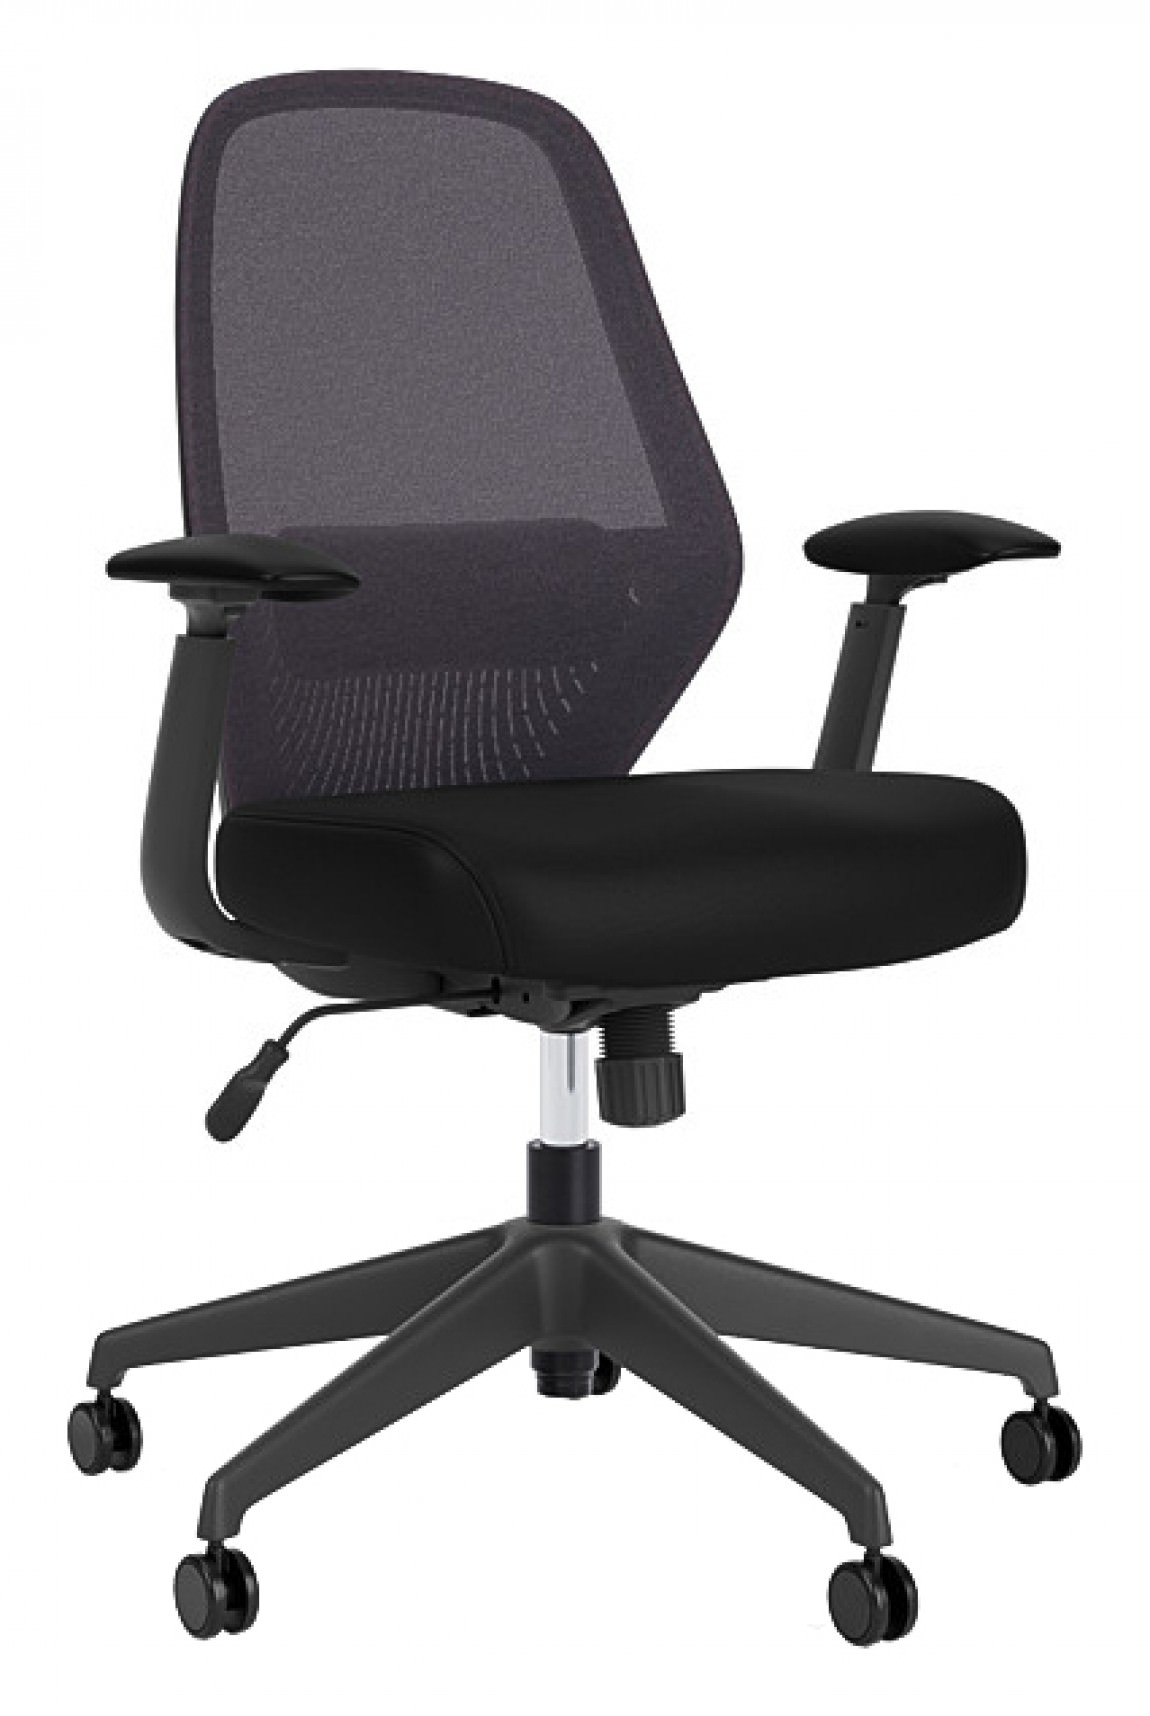 https://madisonliquidators.com/images/p/1150/28666-mesh-back-chair-with-lumbar-support-1.jpg